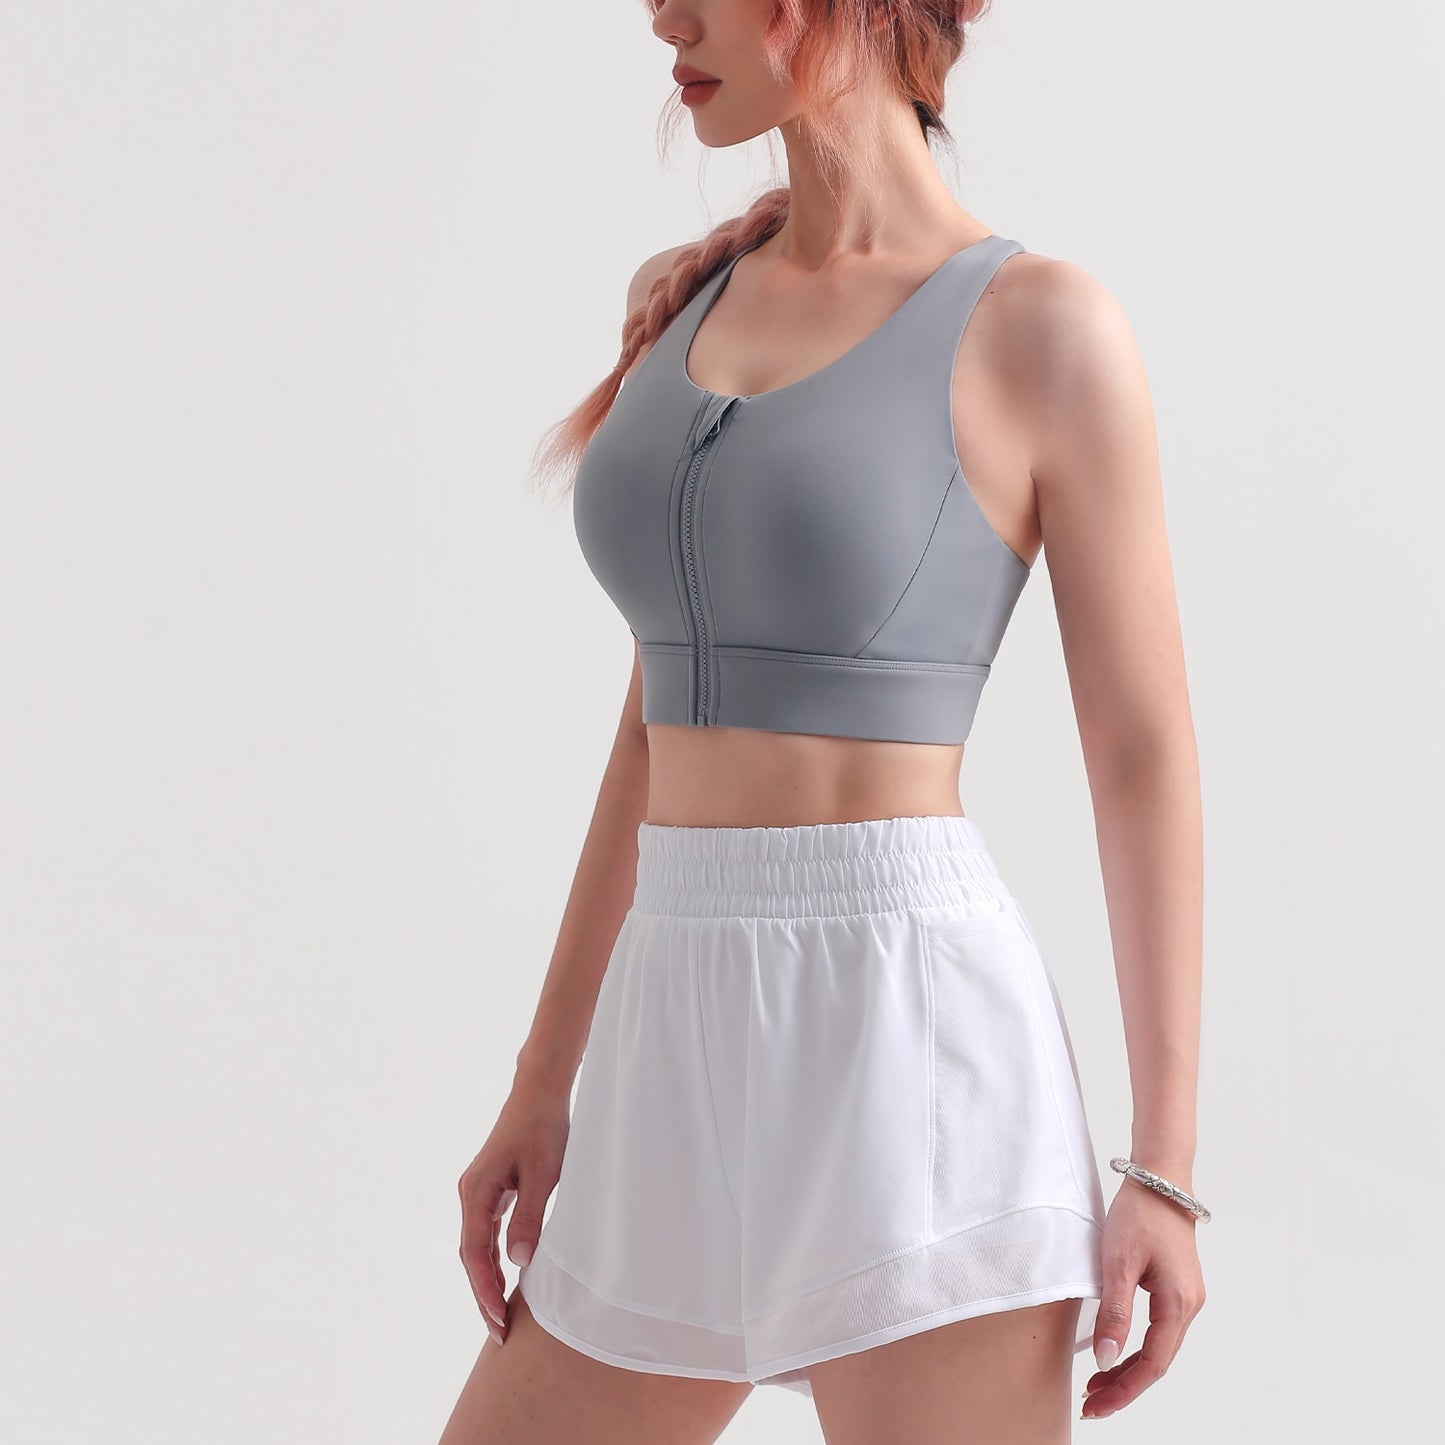 SBHP1457- YKK front zipper fitness bra European and American shock-absorbing push-up sports bra